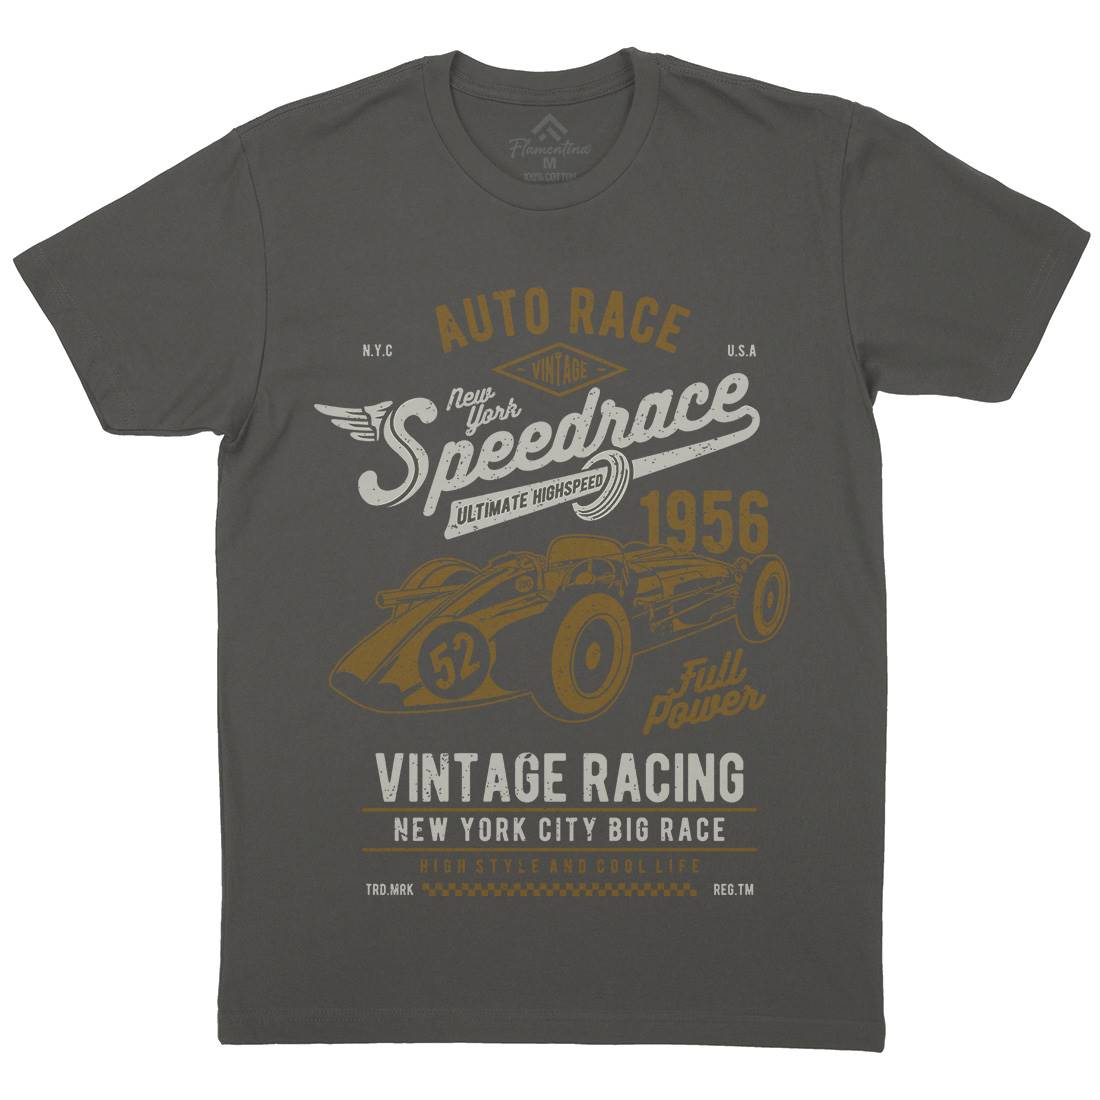 Vintage Speedrace Mens Organic Crew Neck T-Shirt Cars A788